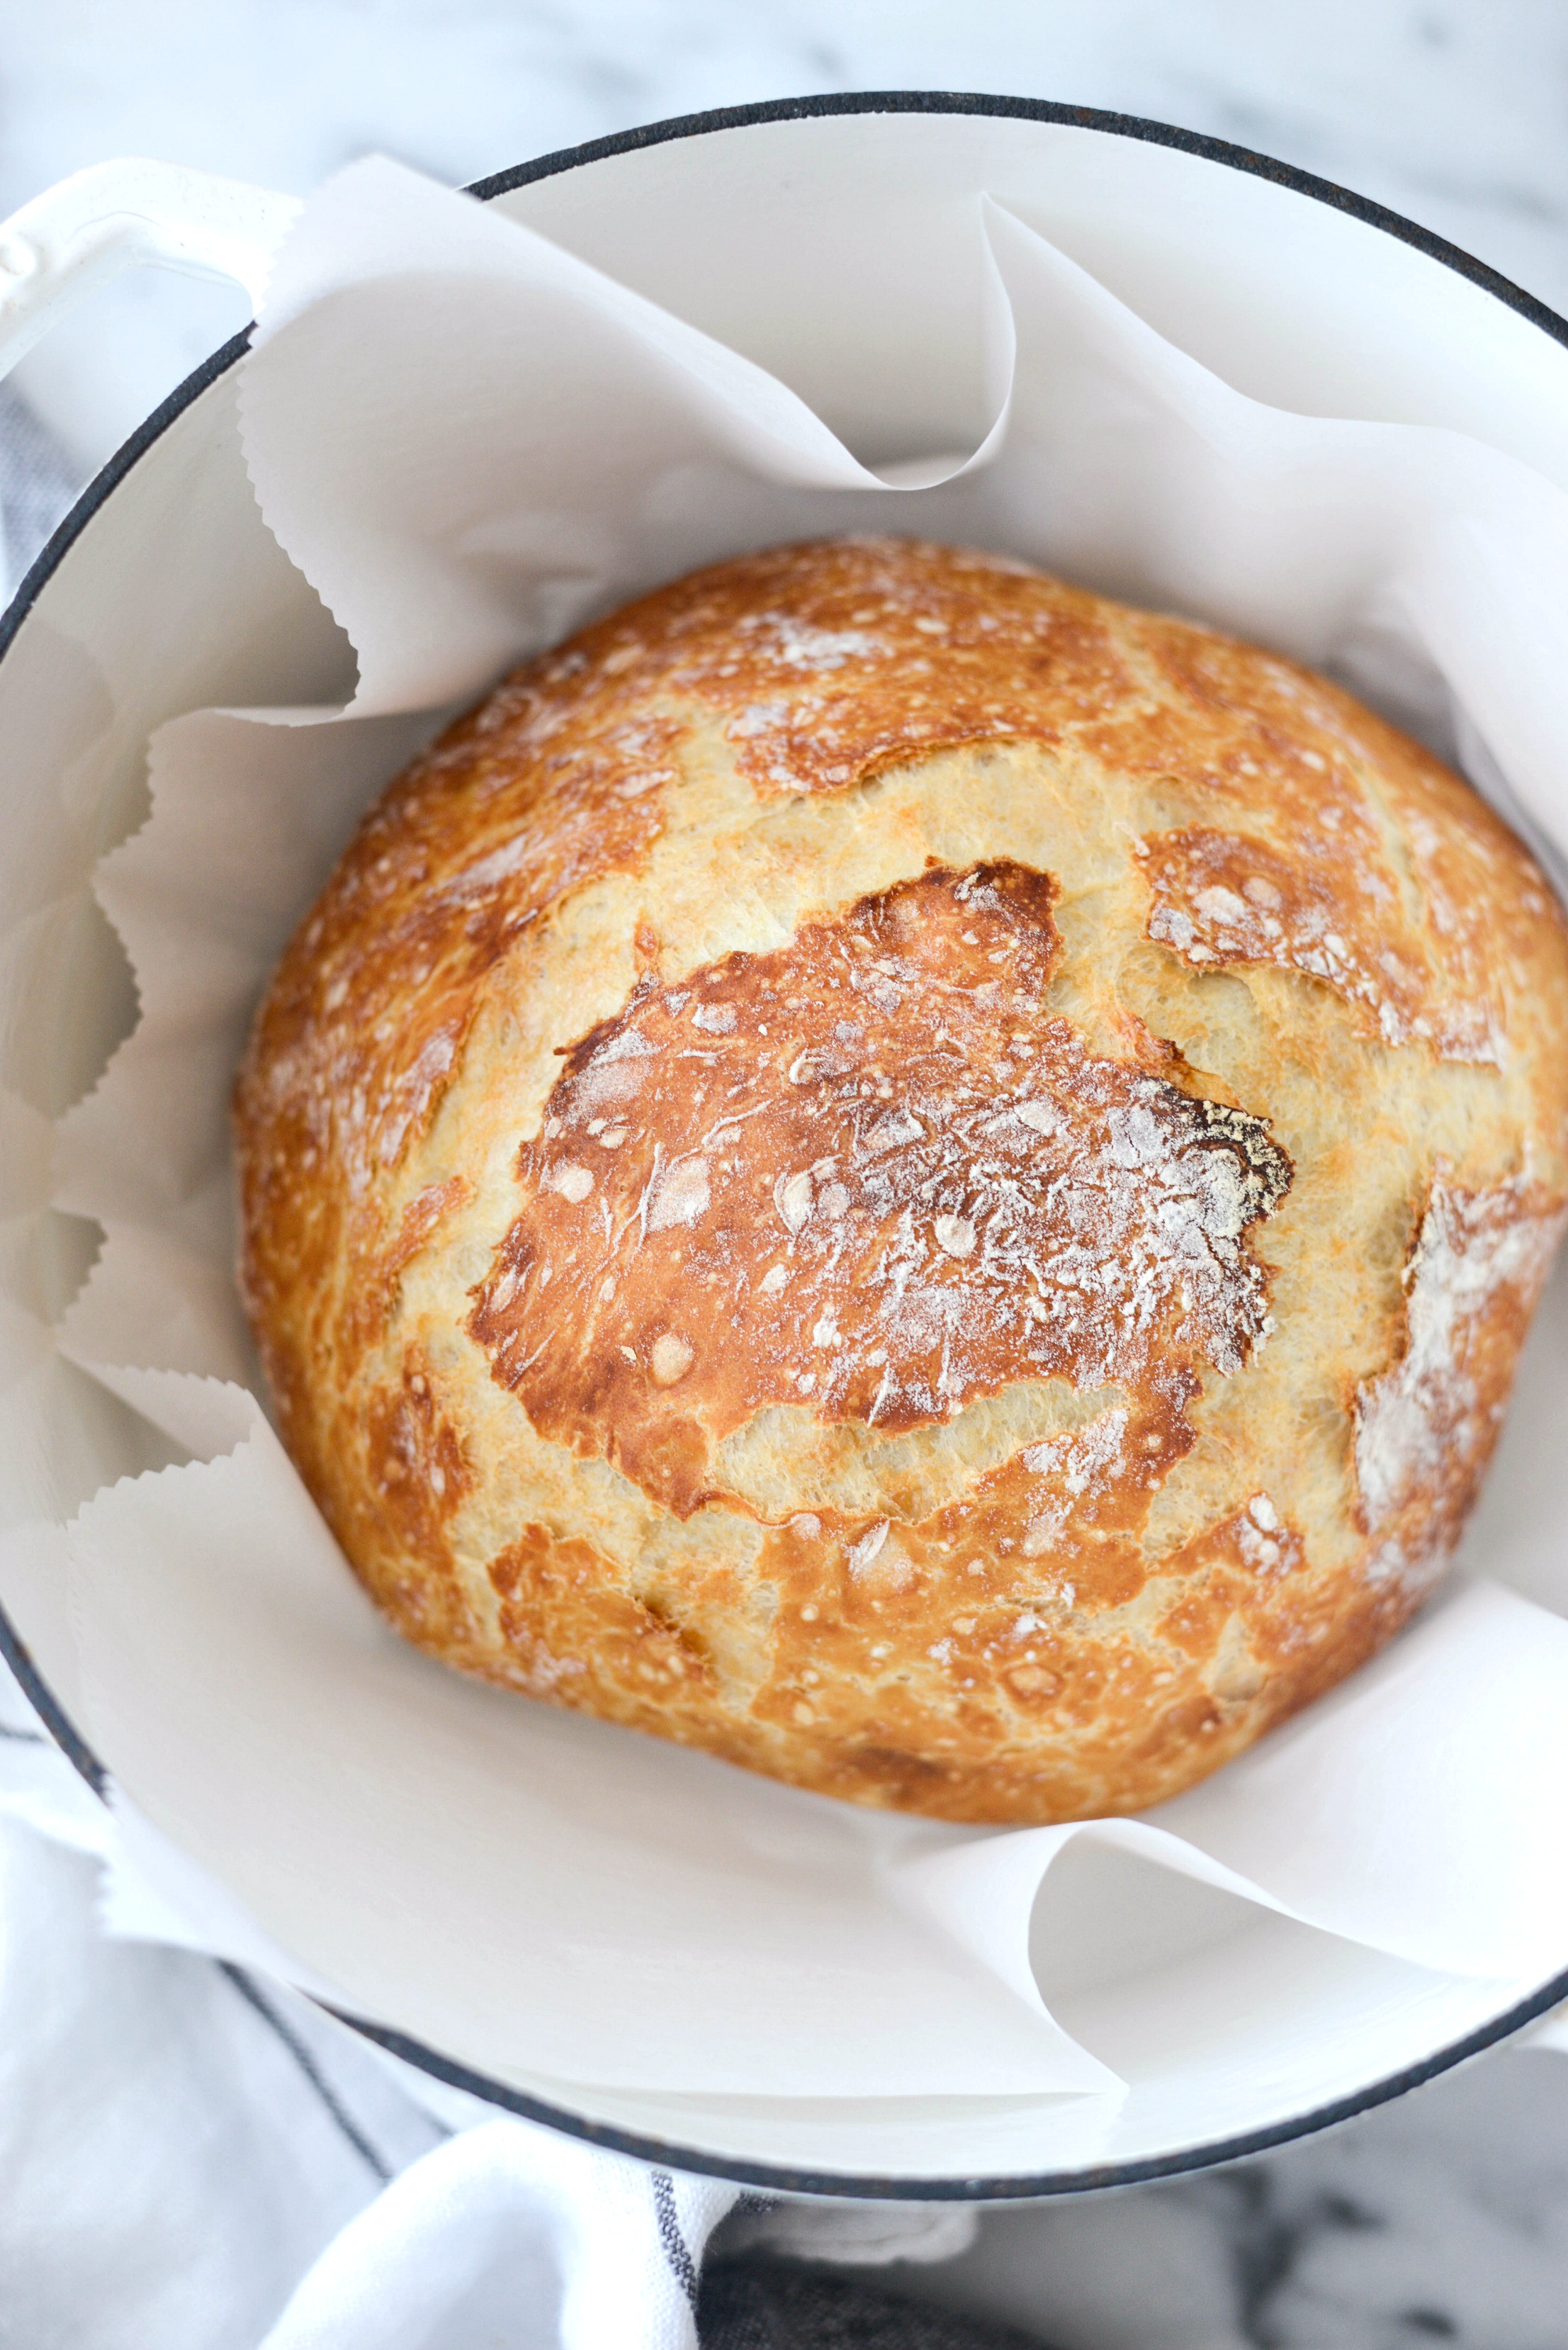 https://www.simplyscratch.com/wp-content/uploads/2019/03/No-Knead-Rustic-Bread-Loaf-l-SimplyScratch.com-homemade-noknead-bread-loaf-rustic-fromscratch-dutchoven-loaves-17.jpg